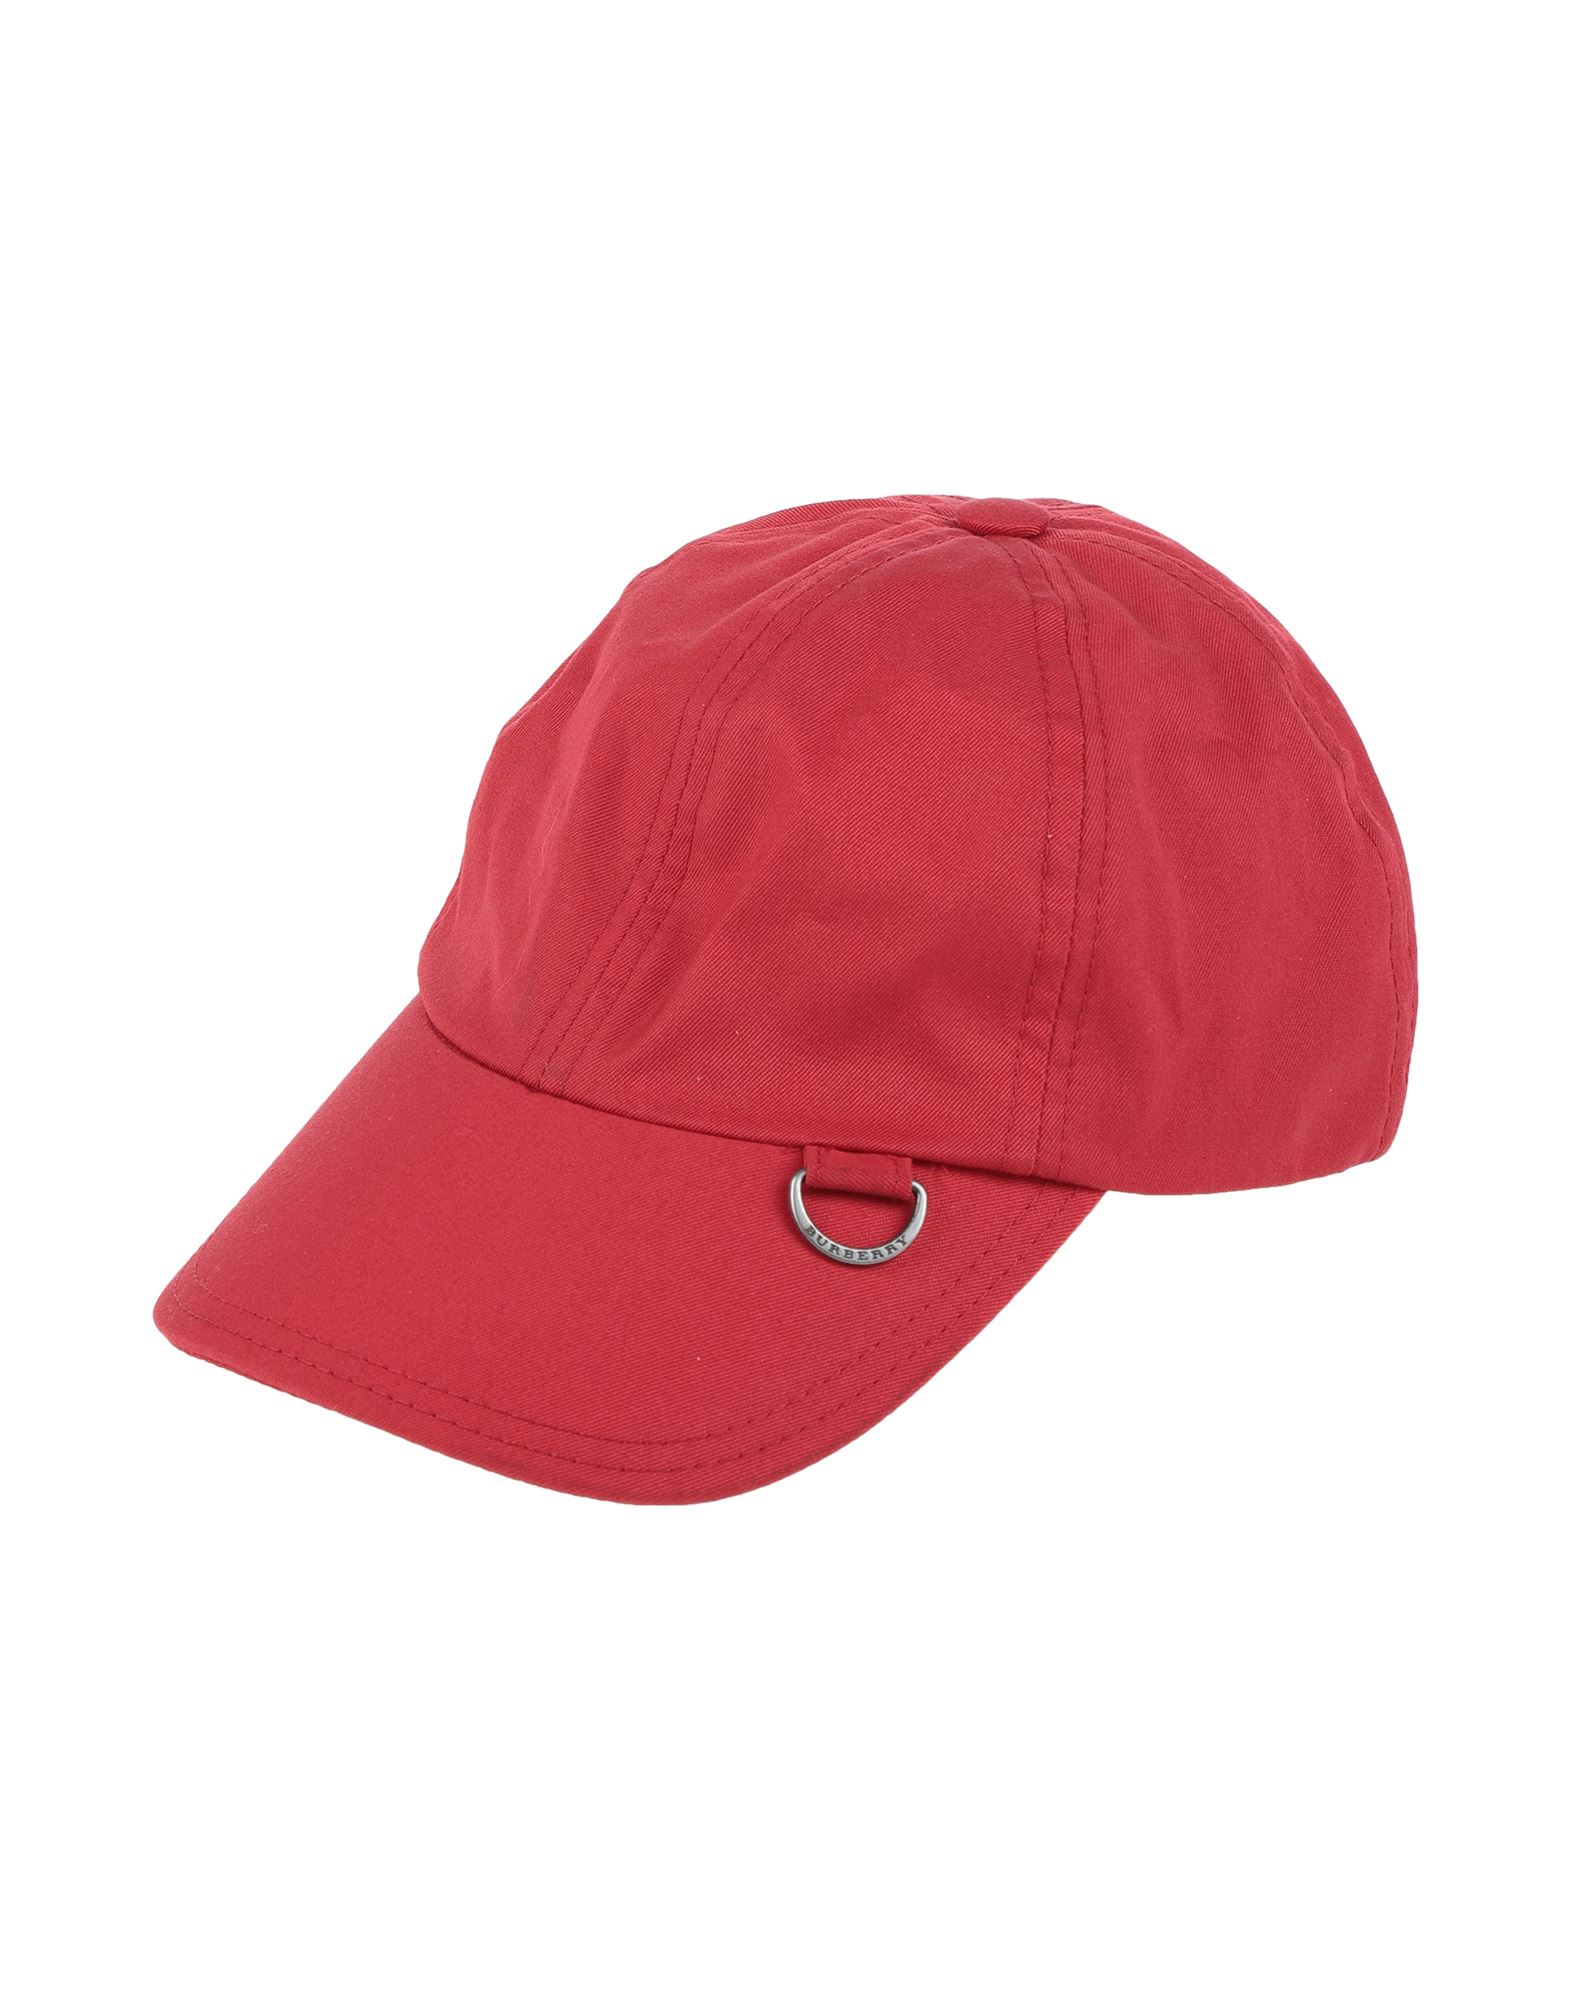 BURBERRY Hats - Item 46733128